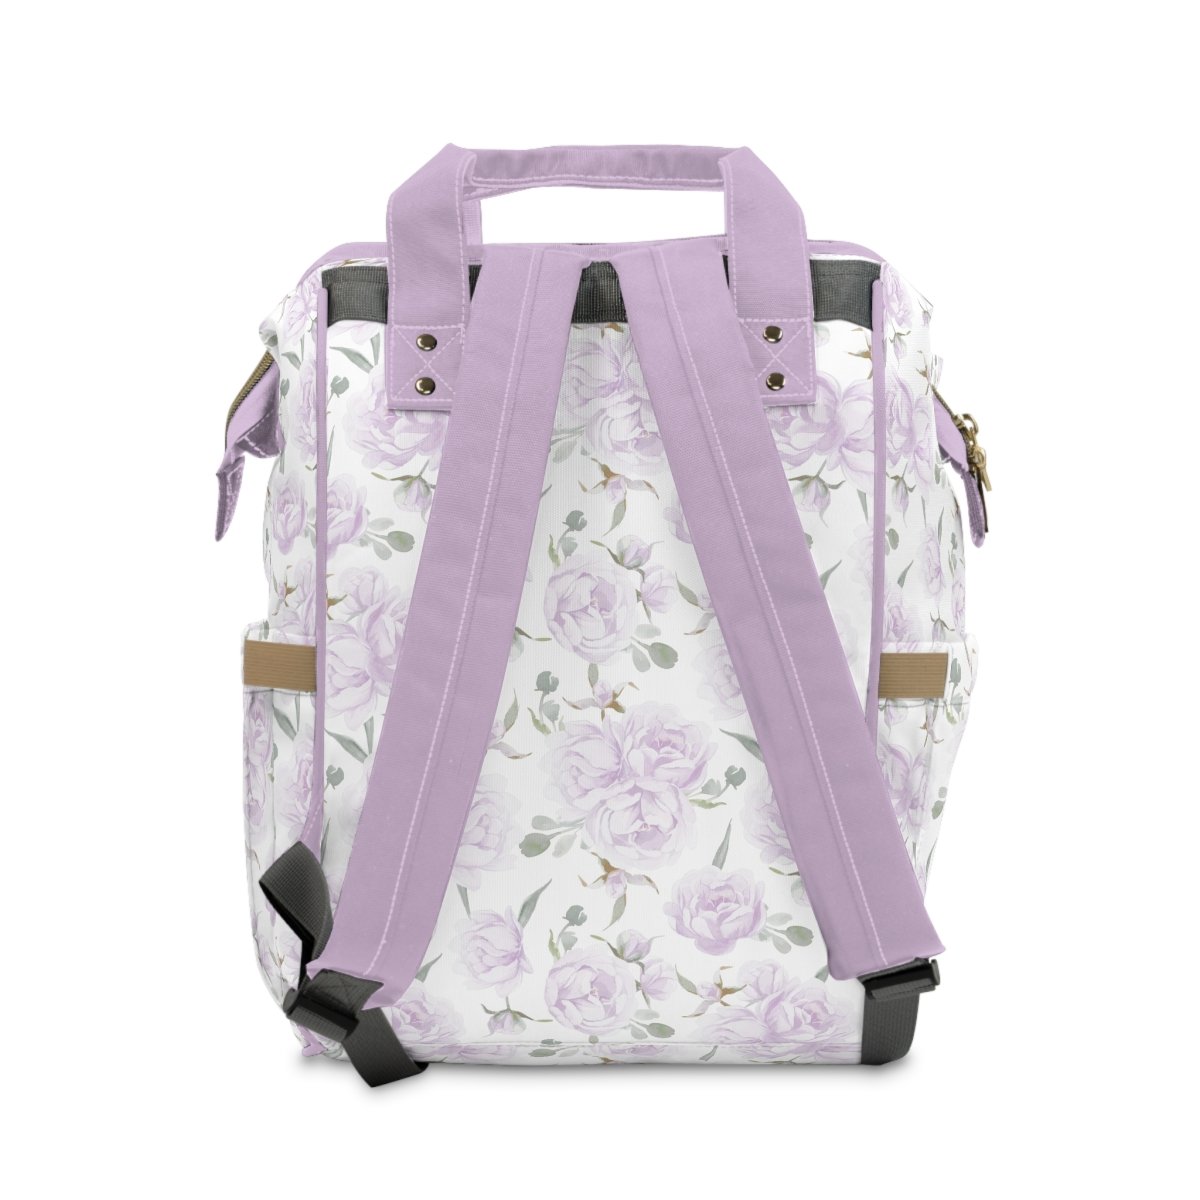 Lovely Lavender Personalized Backpack Diaper Bag - Backpack